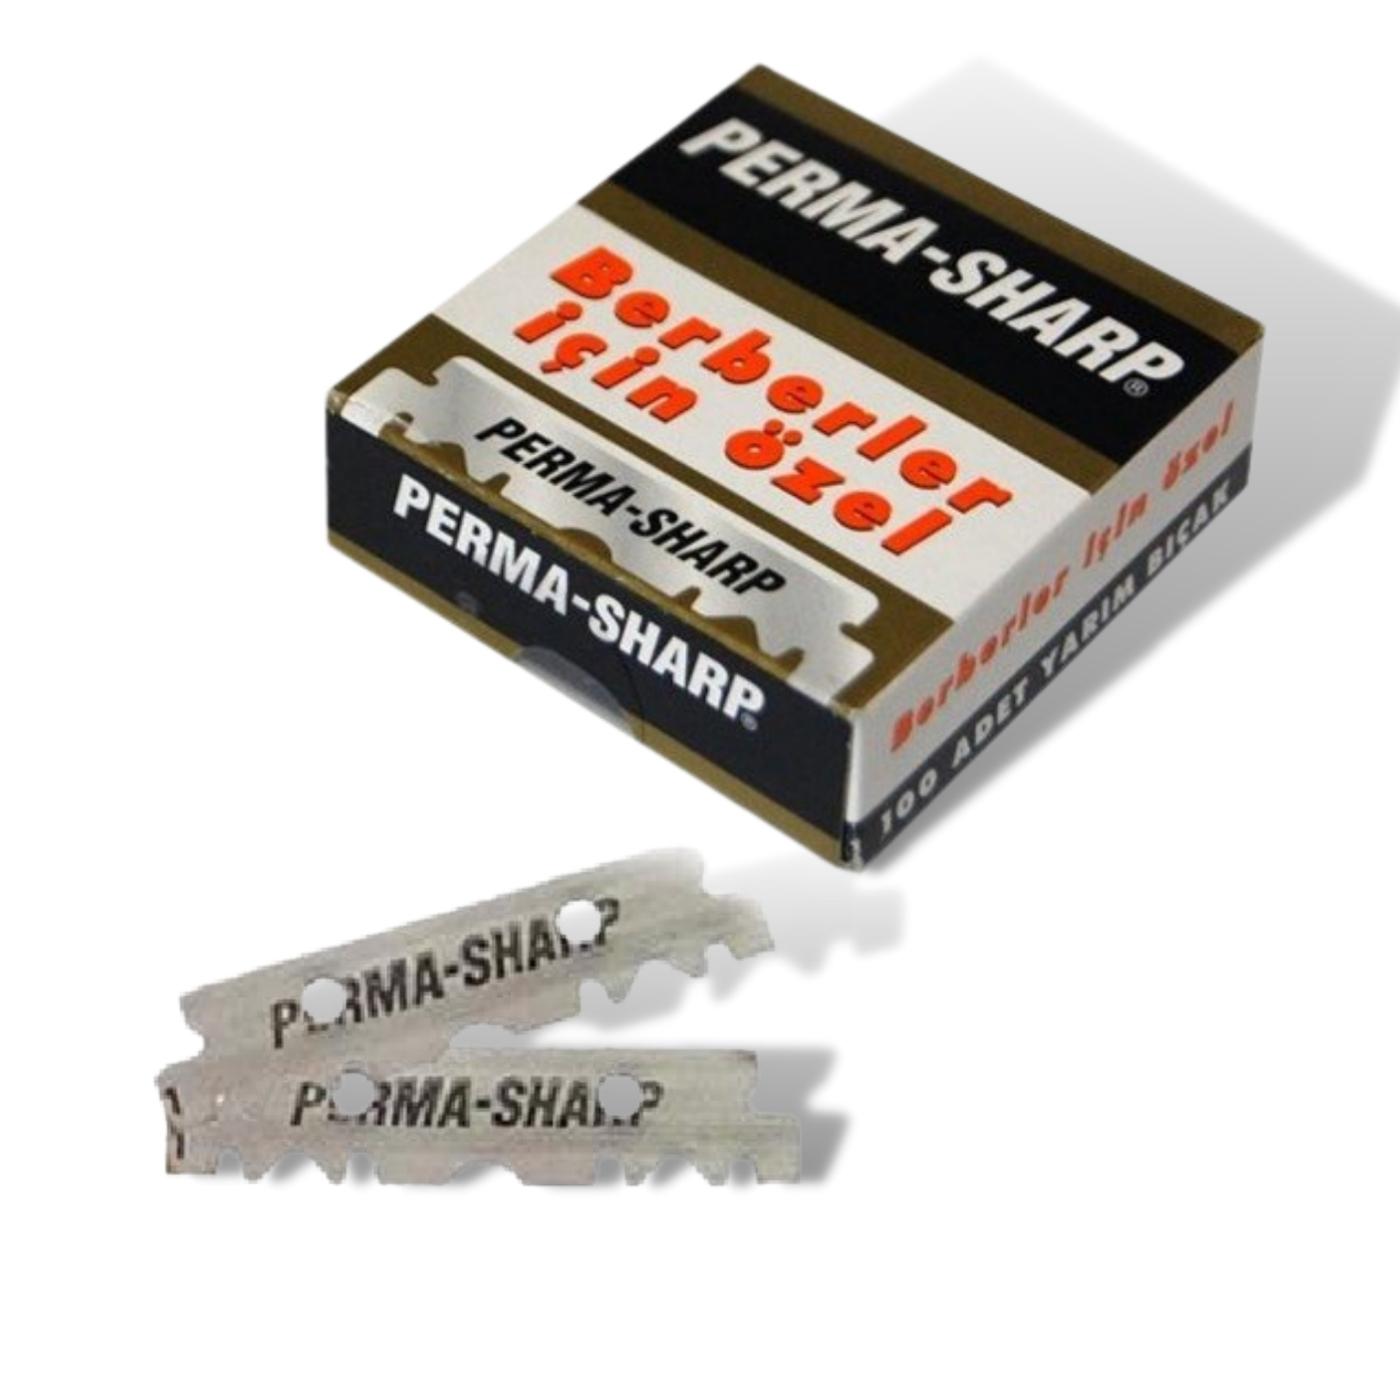 Perma-Sharp halbe Klinge Rasierklingen Packungsinhalt 100 Stück ausgepackt